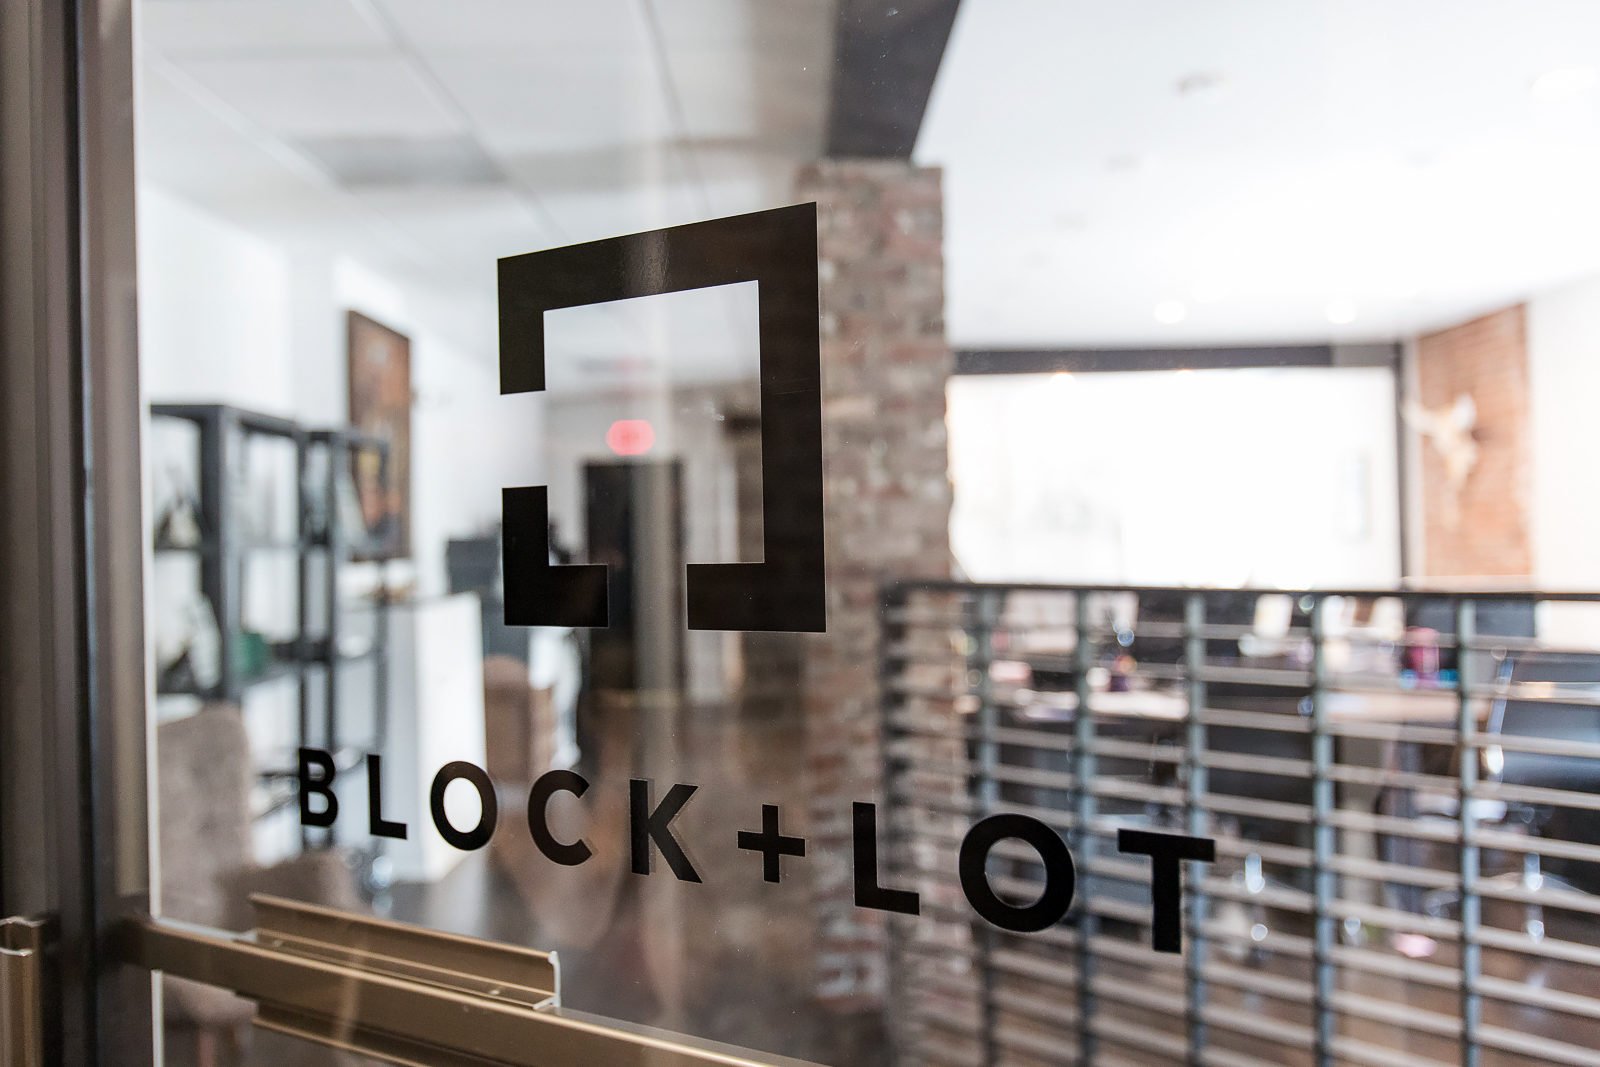 An Identity for Block + Lot By Bullhorn Creative